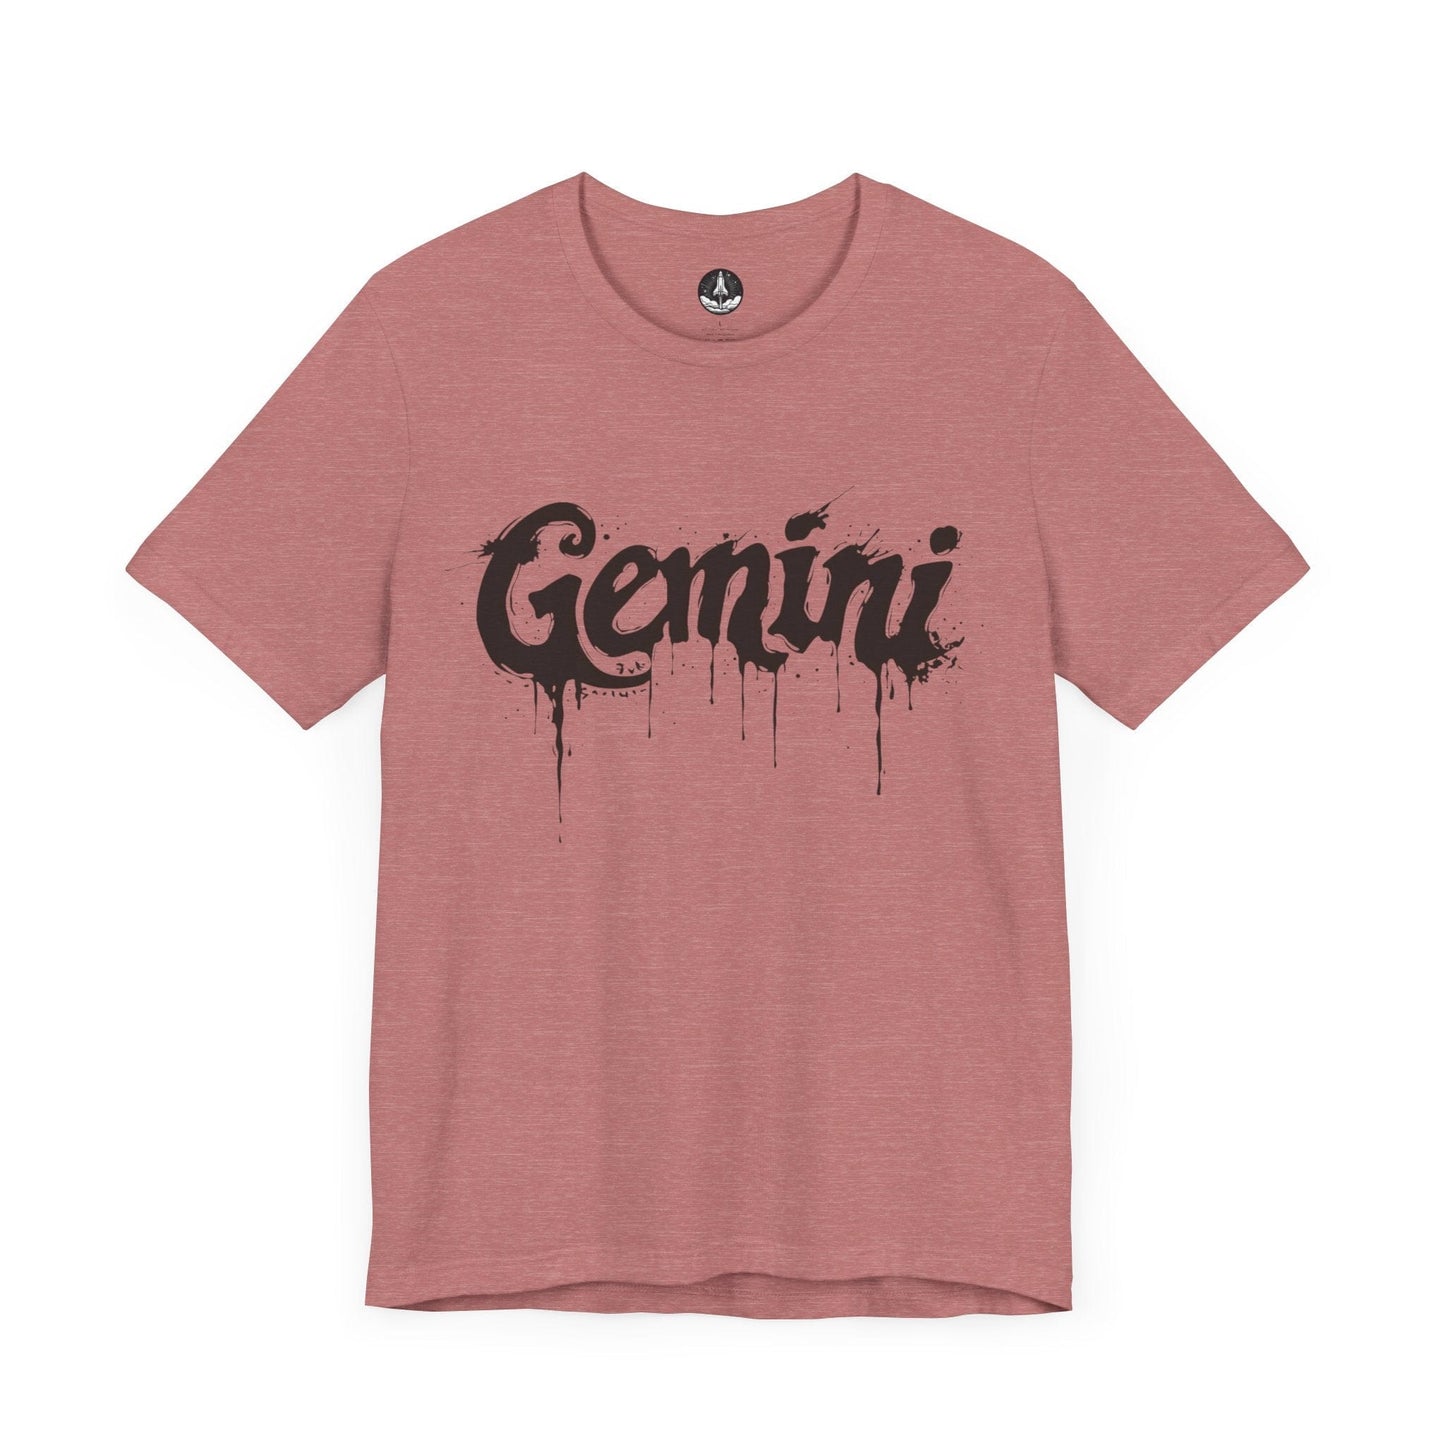 T-Shirt Heather Mauve / S Gemini Ink Drop TShirt